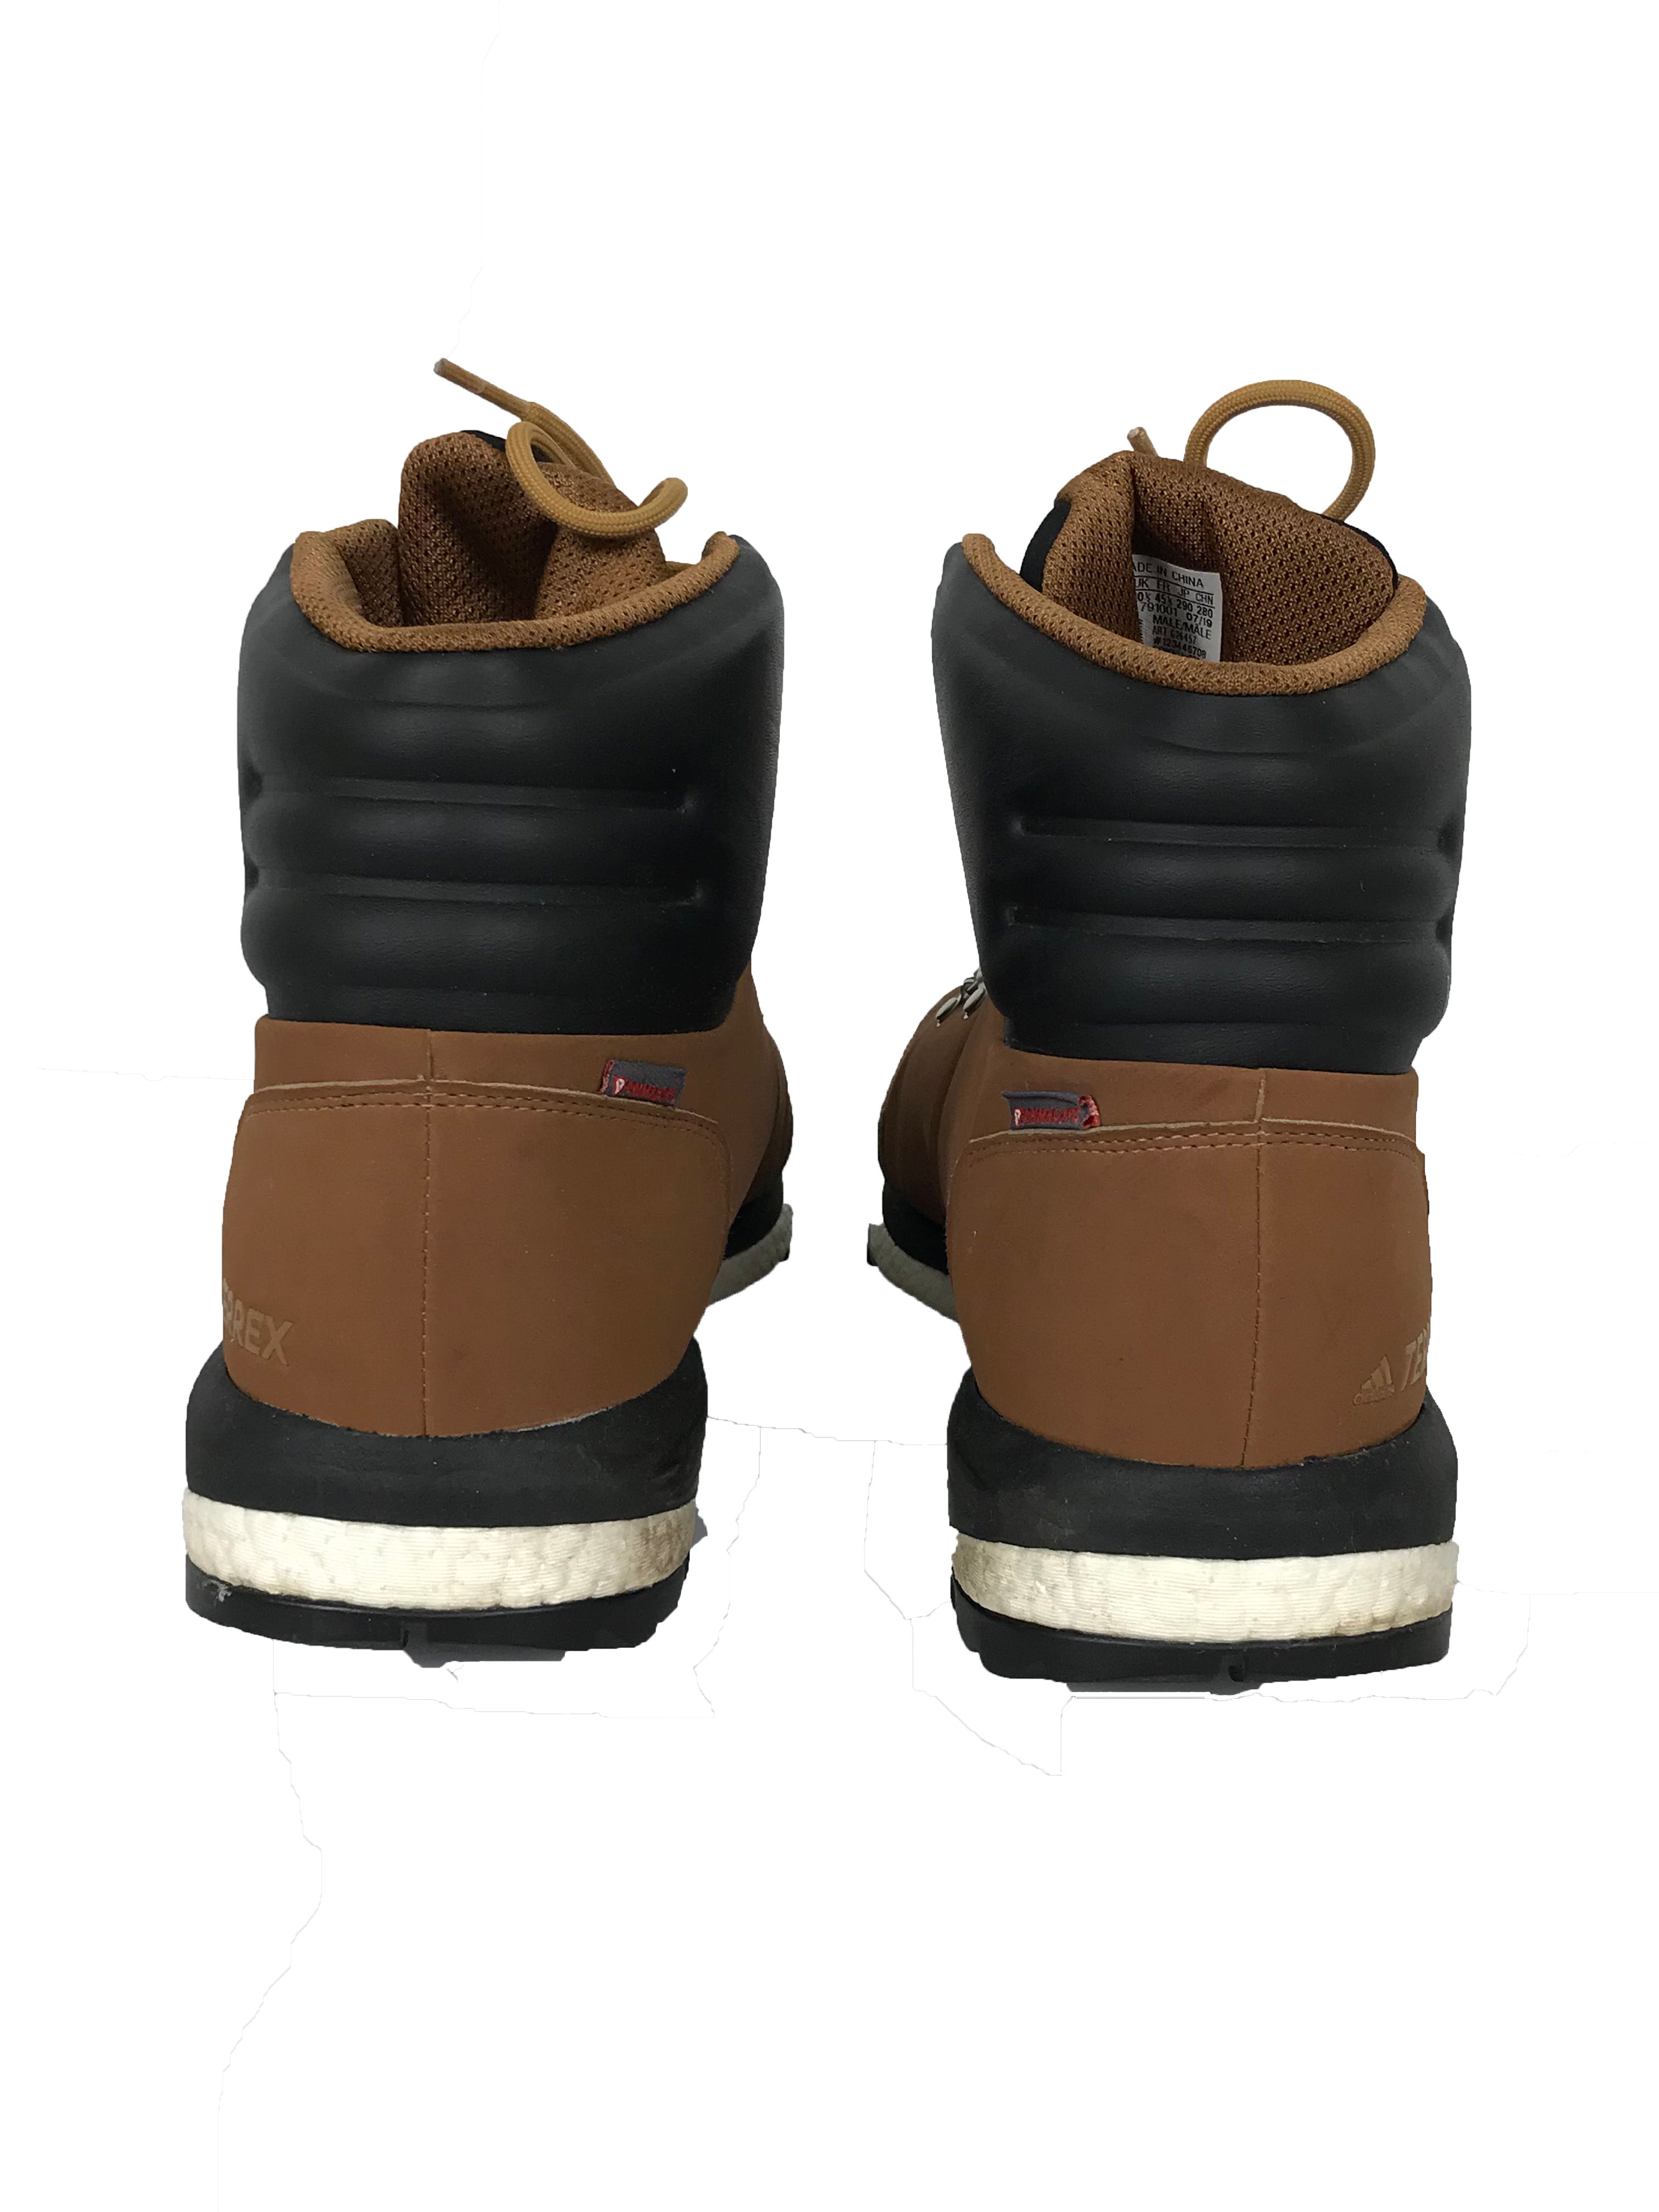 Adidas Terrex Pathmaker Brown Hiking Boots Men's Size 11